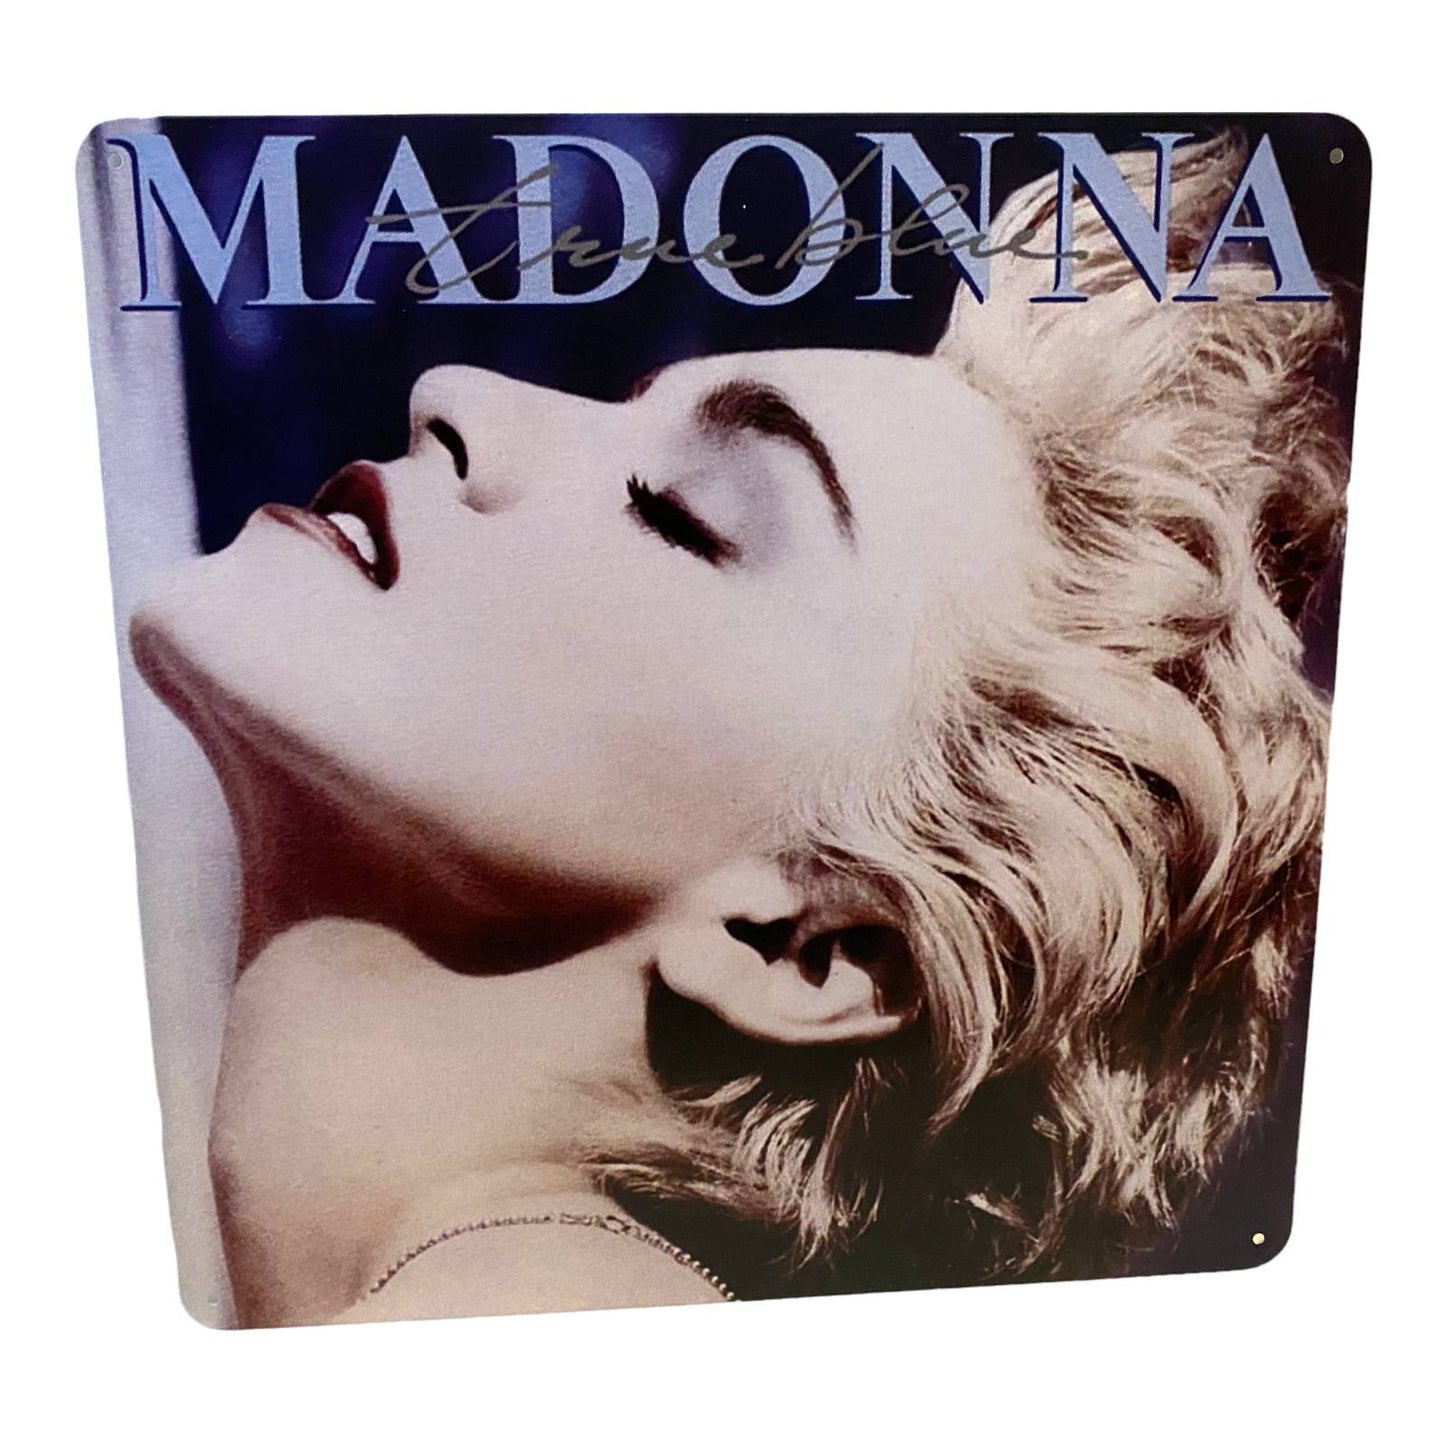 Madonna - True Blue  Album Cover Metal Print Tin Sign 12"x 12"